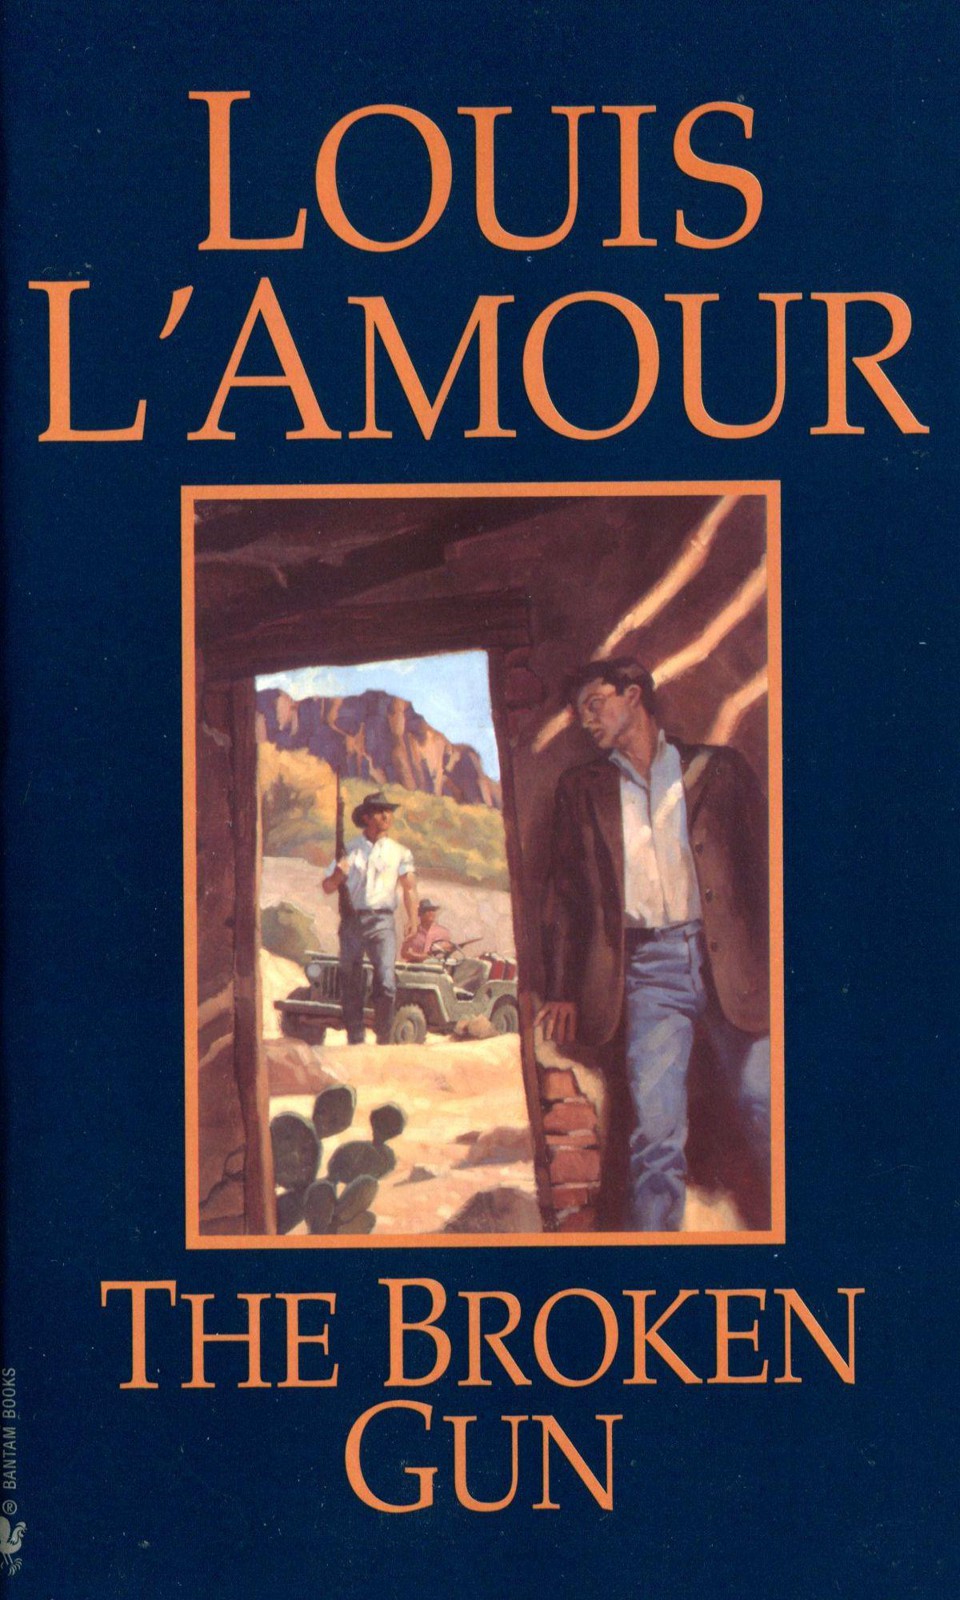 Novel 1966 - The Broken Gun (v5.0) by Louis L'Amour